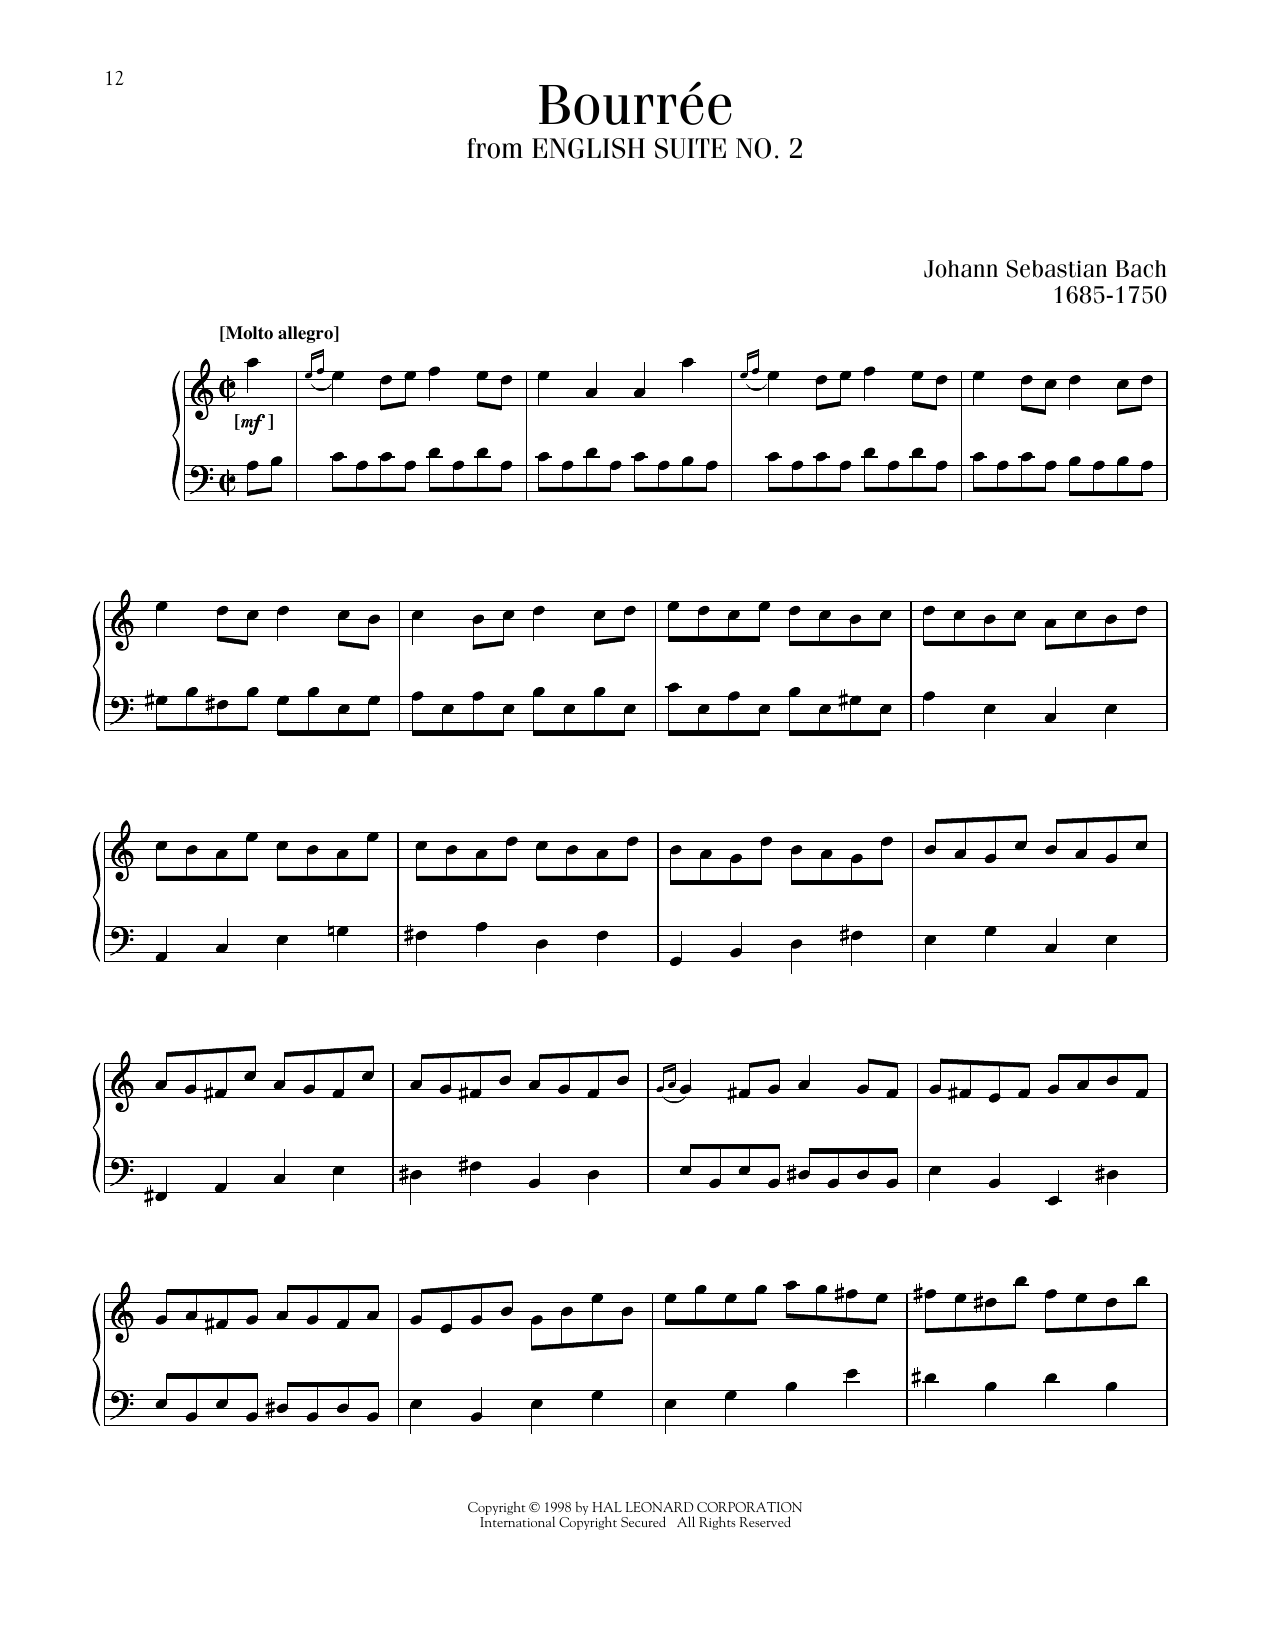 Johann Sebastian Bach Bourree sheet music notes printable PDF score